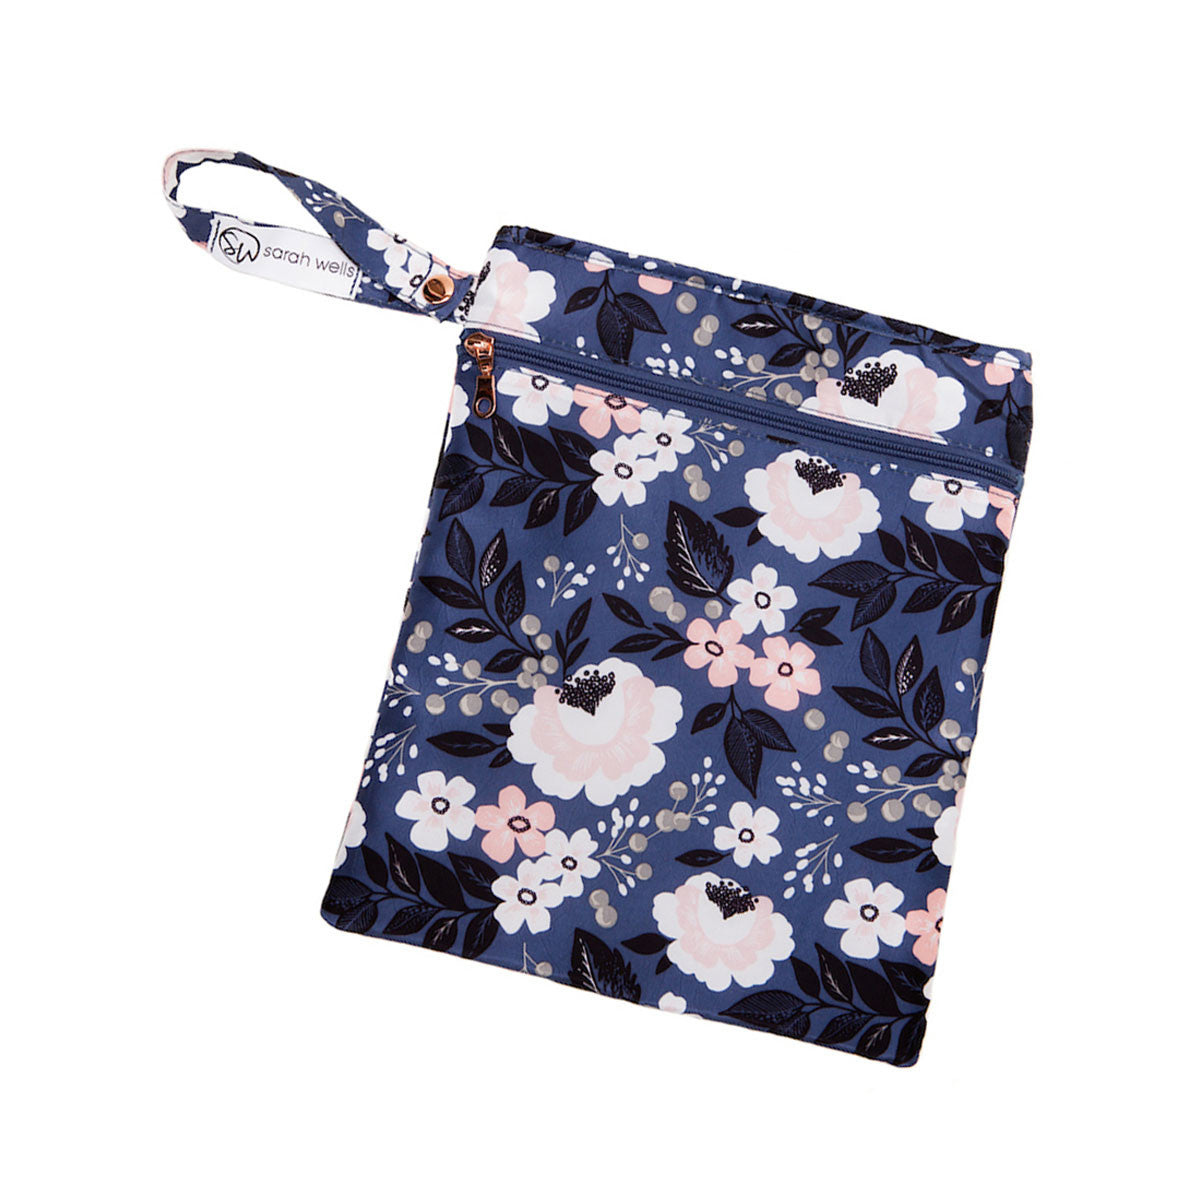 Pumparoo (Le Floral) / Breast Pump Bags & Accessories from Sarah Wells